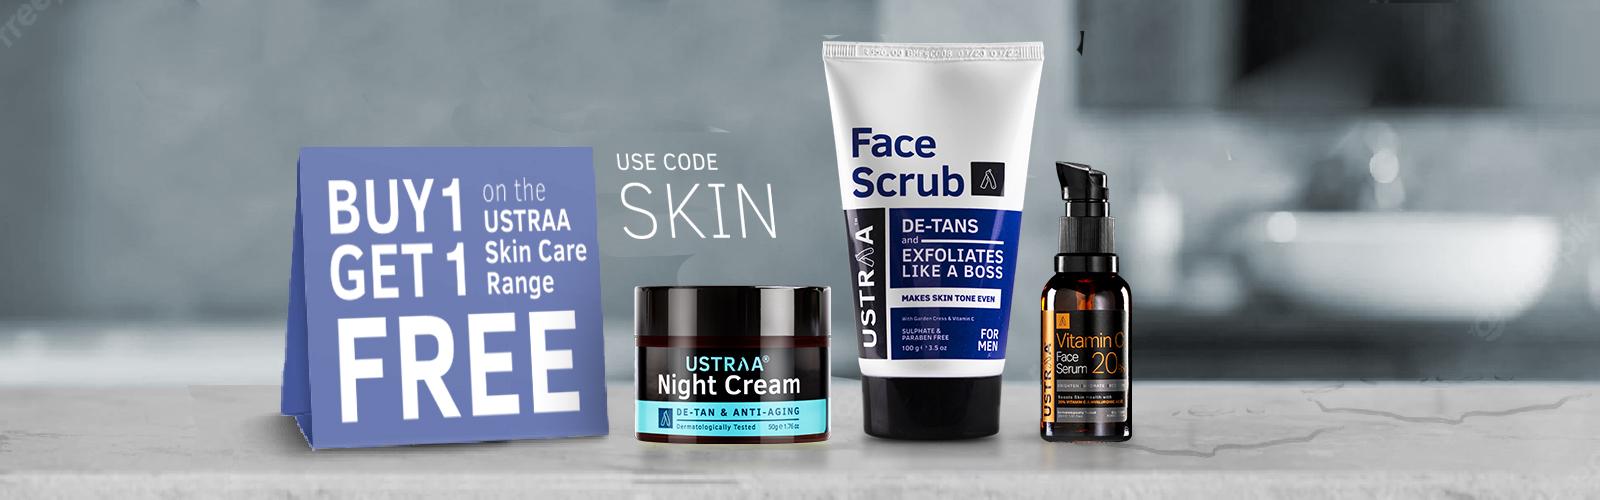 Skin Care offer